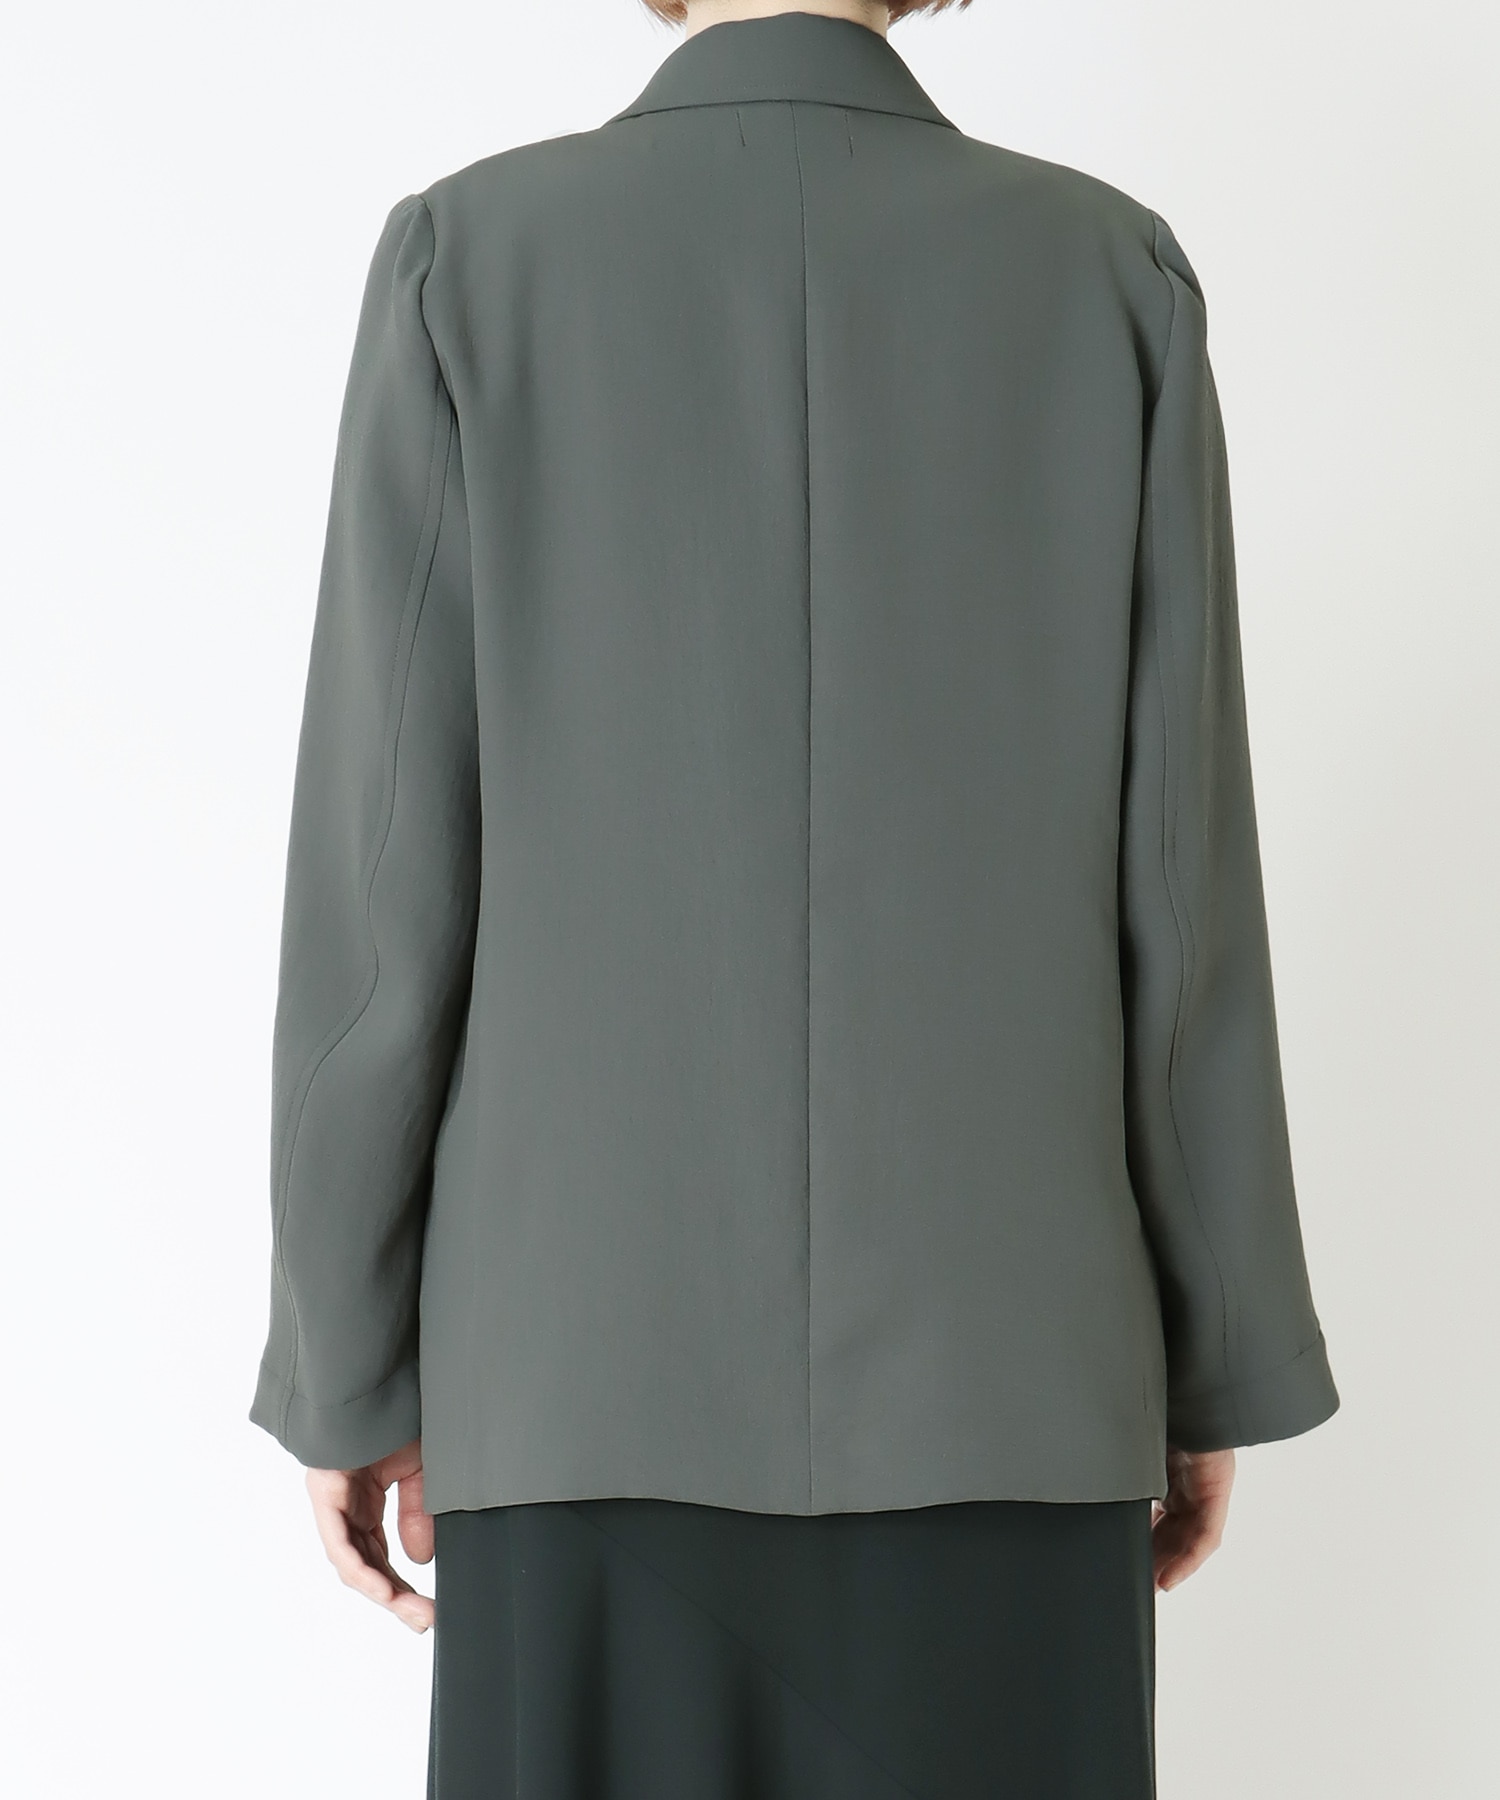 staple shrink tailored jacket